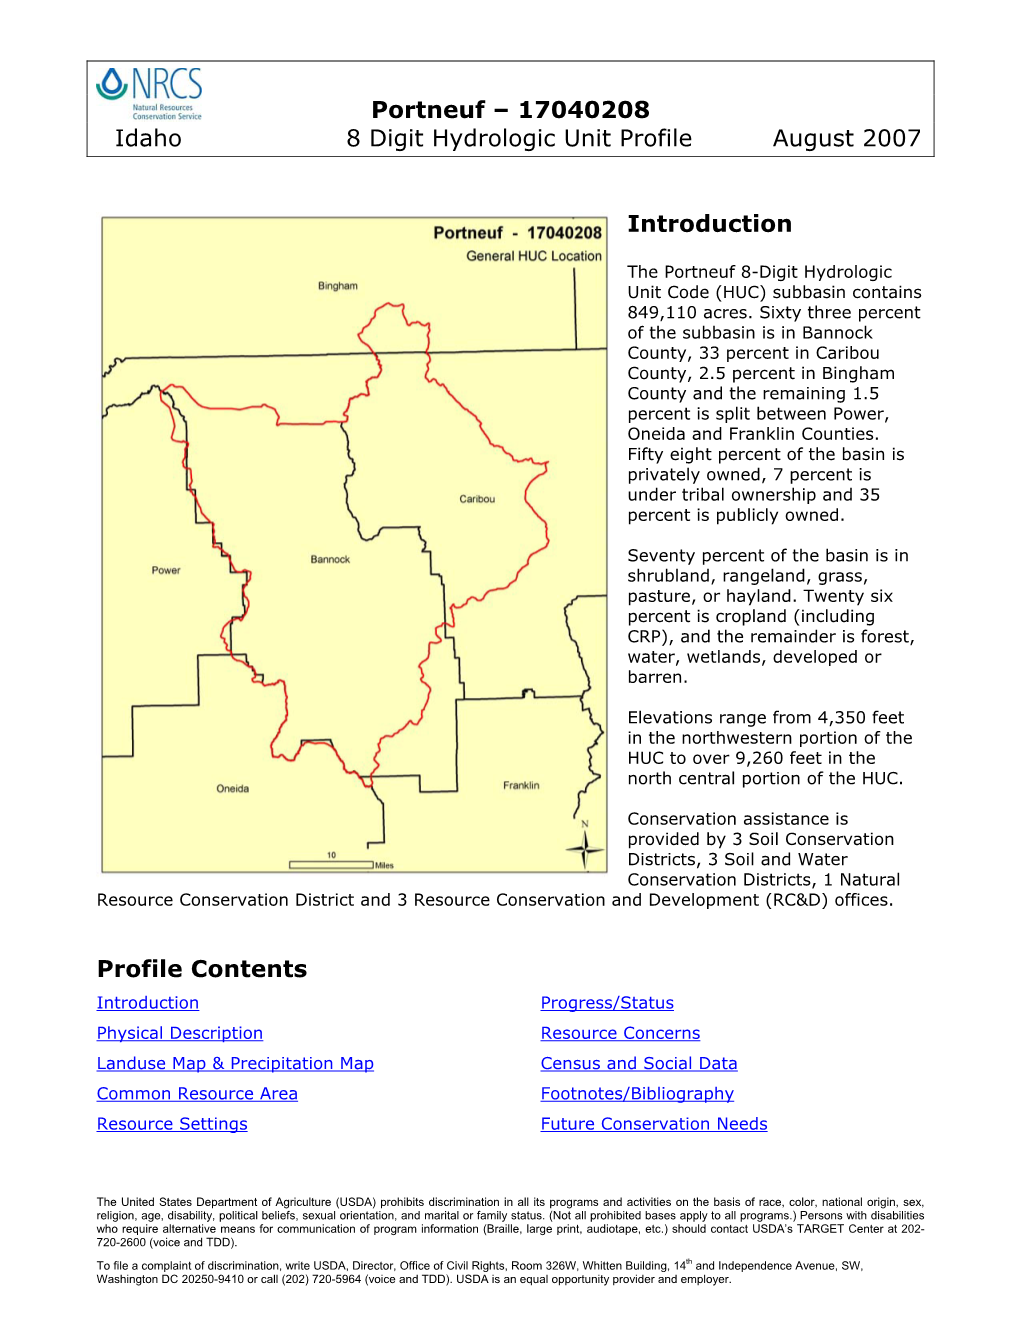 Portneuf – 17040208 Idaho 8 Digit Hydrologic Unit Profile August 2007